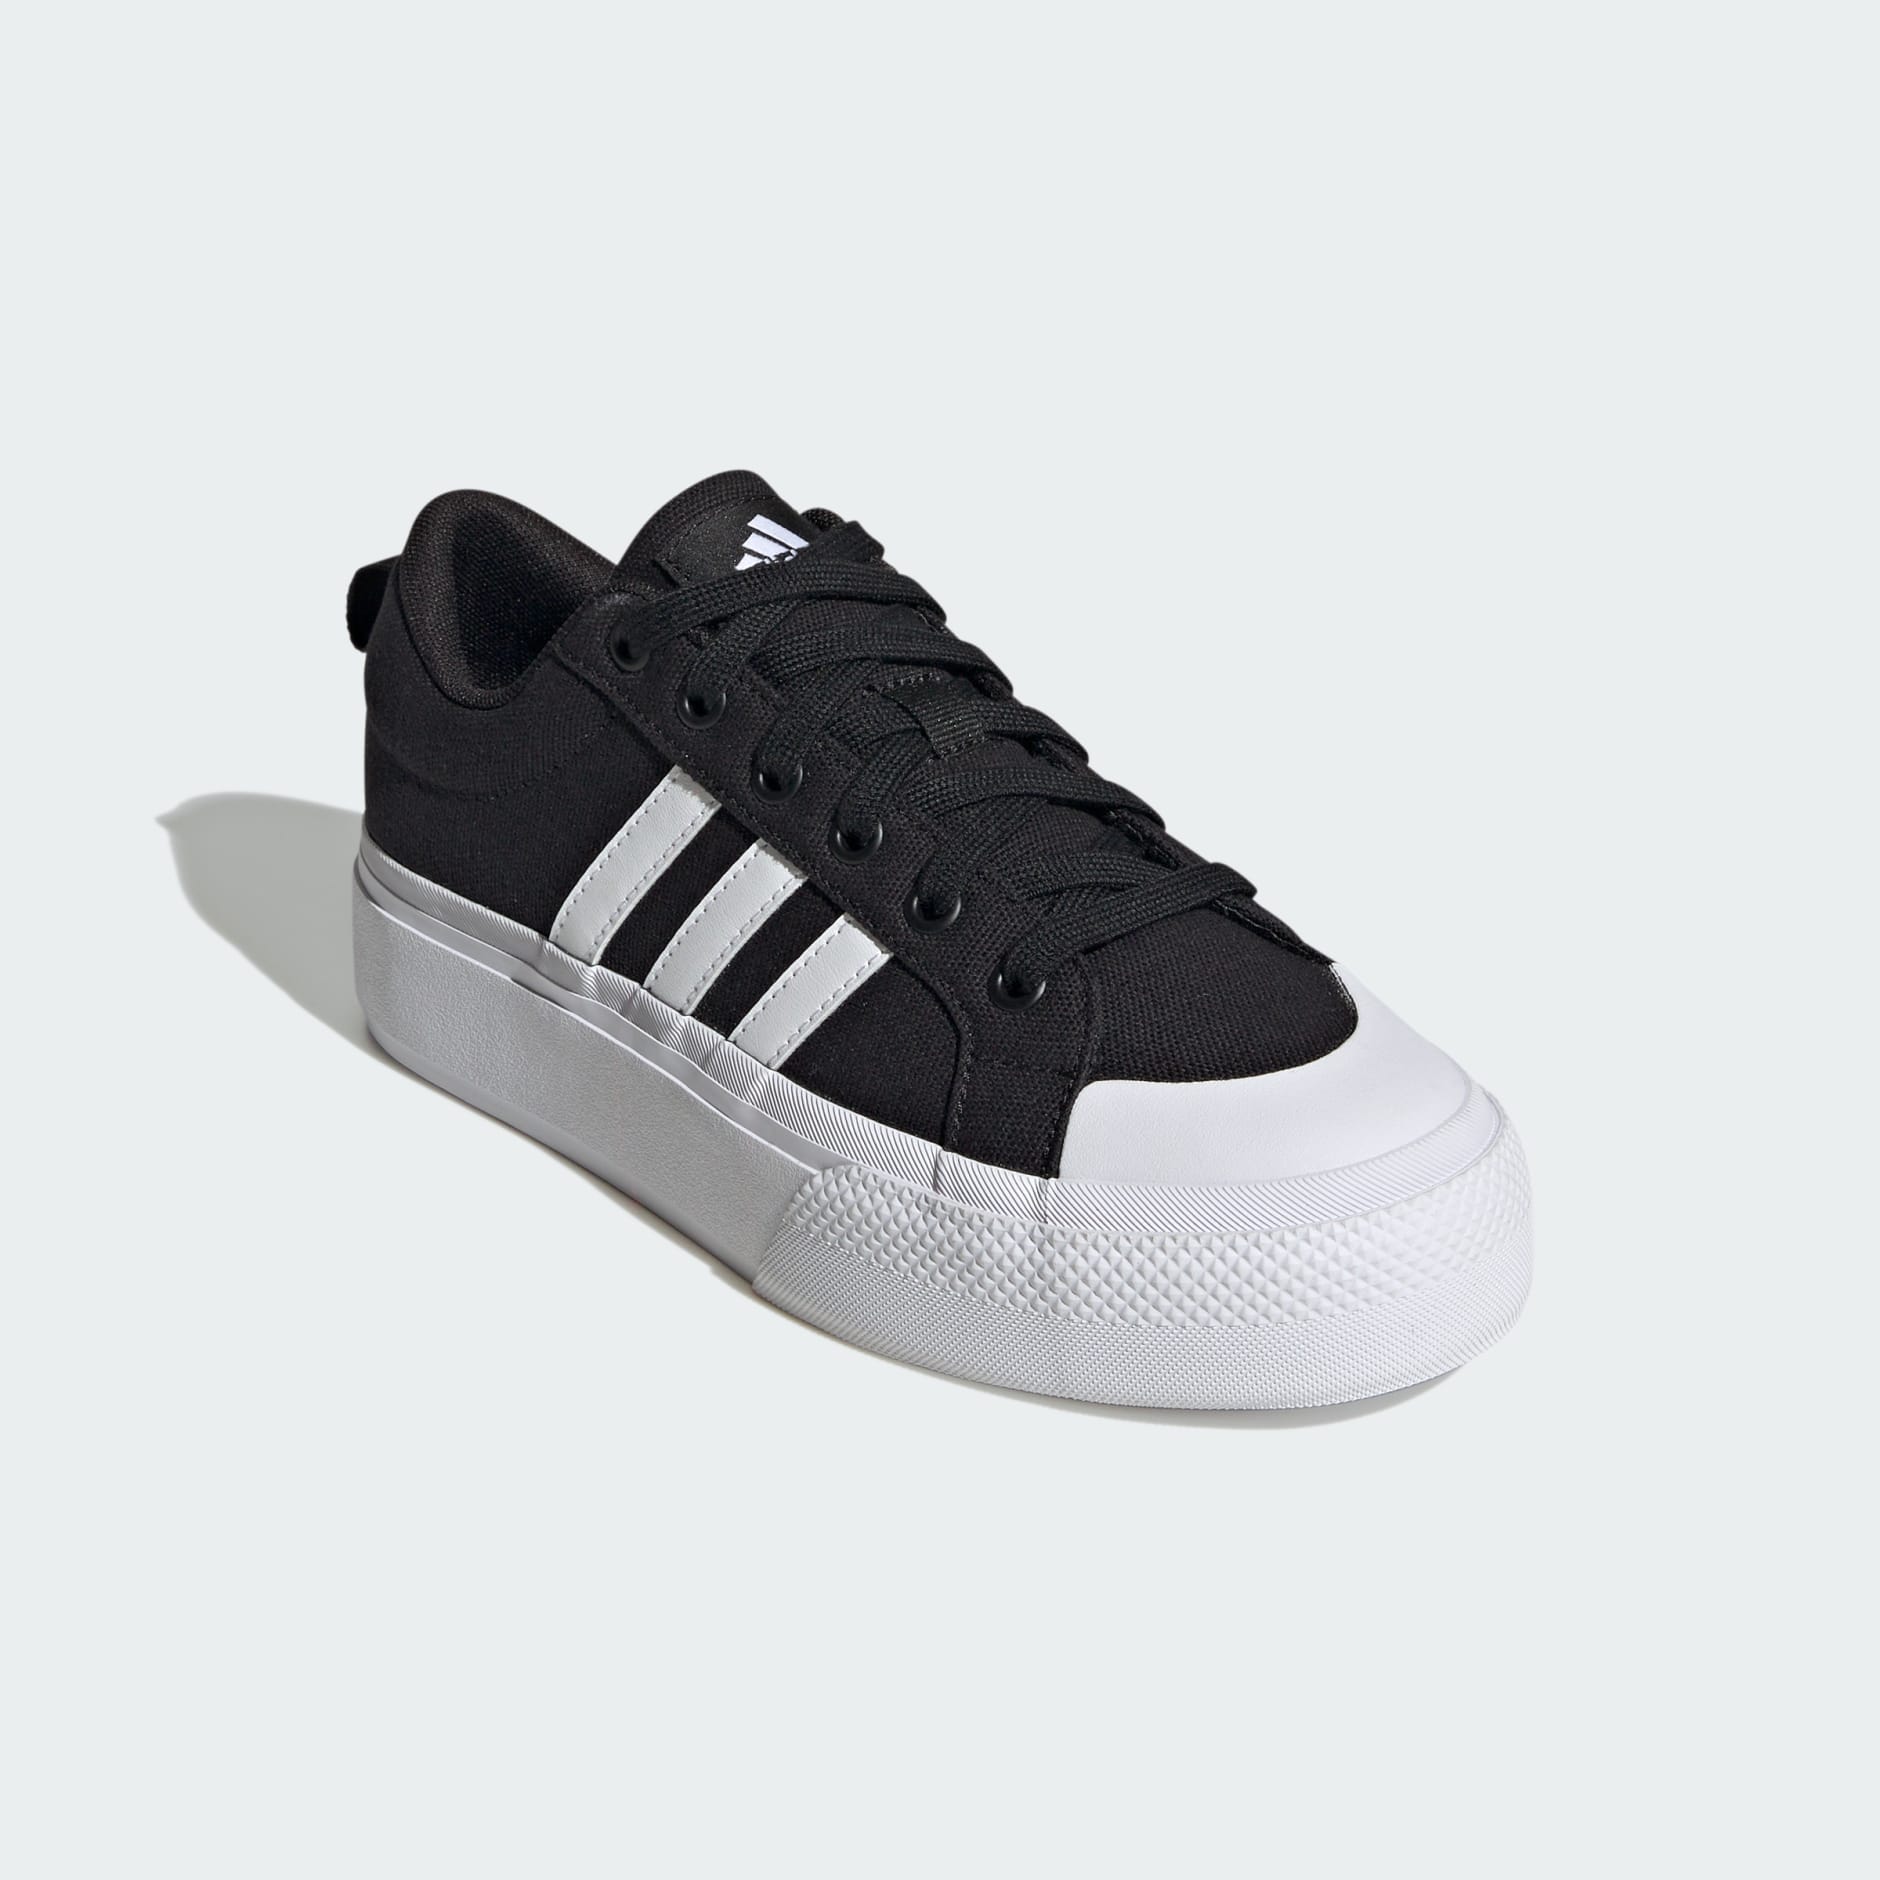 Adidas Bravada shoes size 11 New